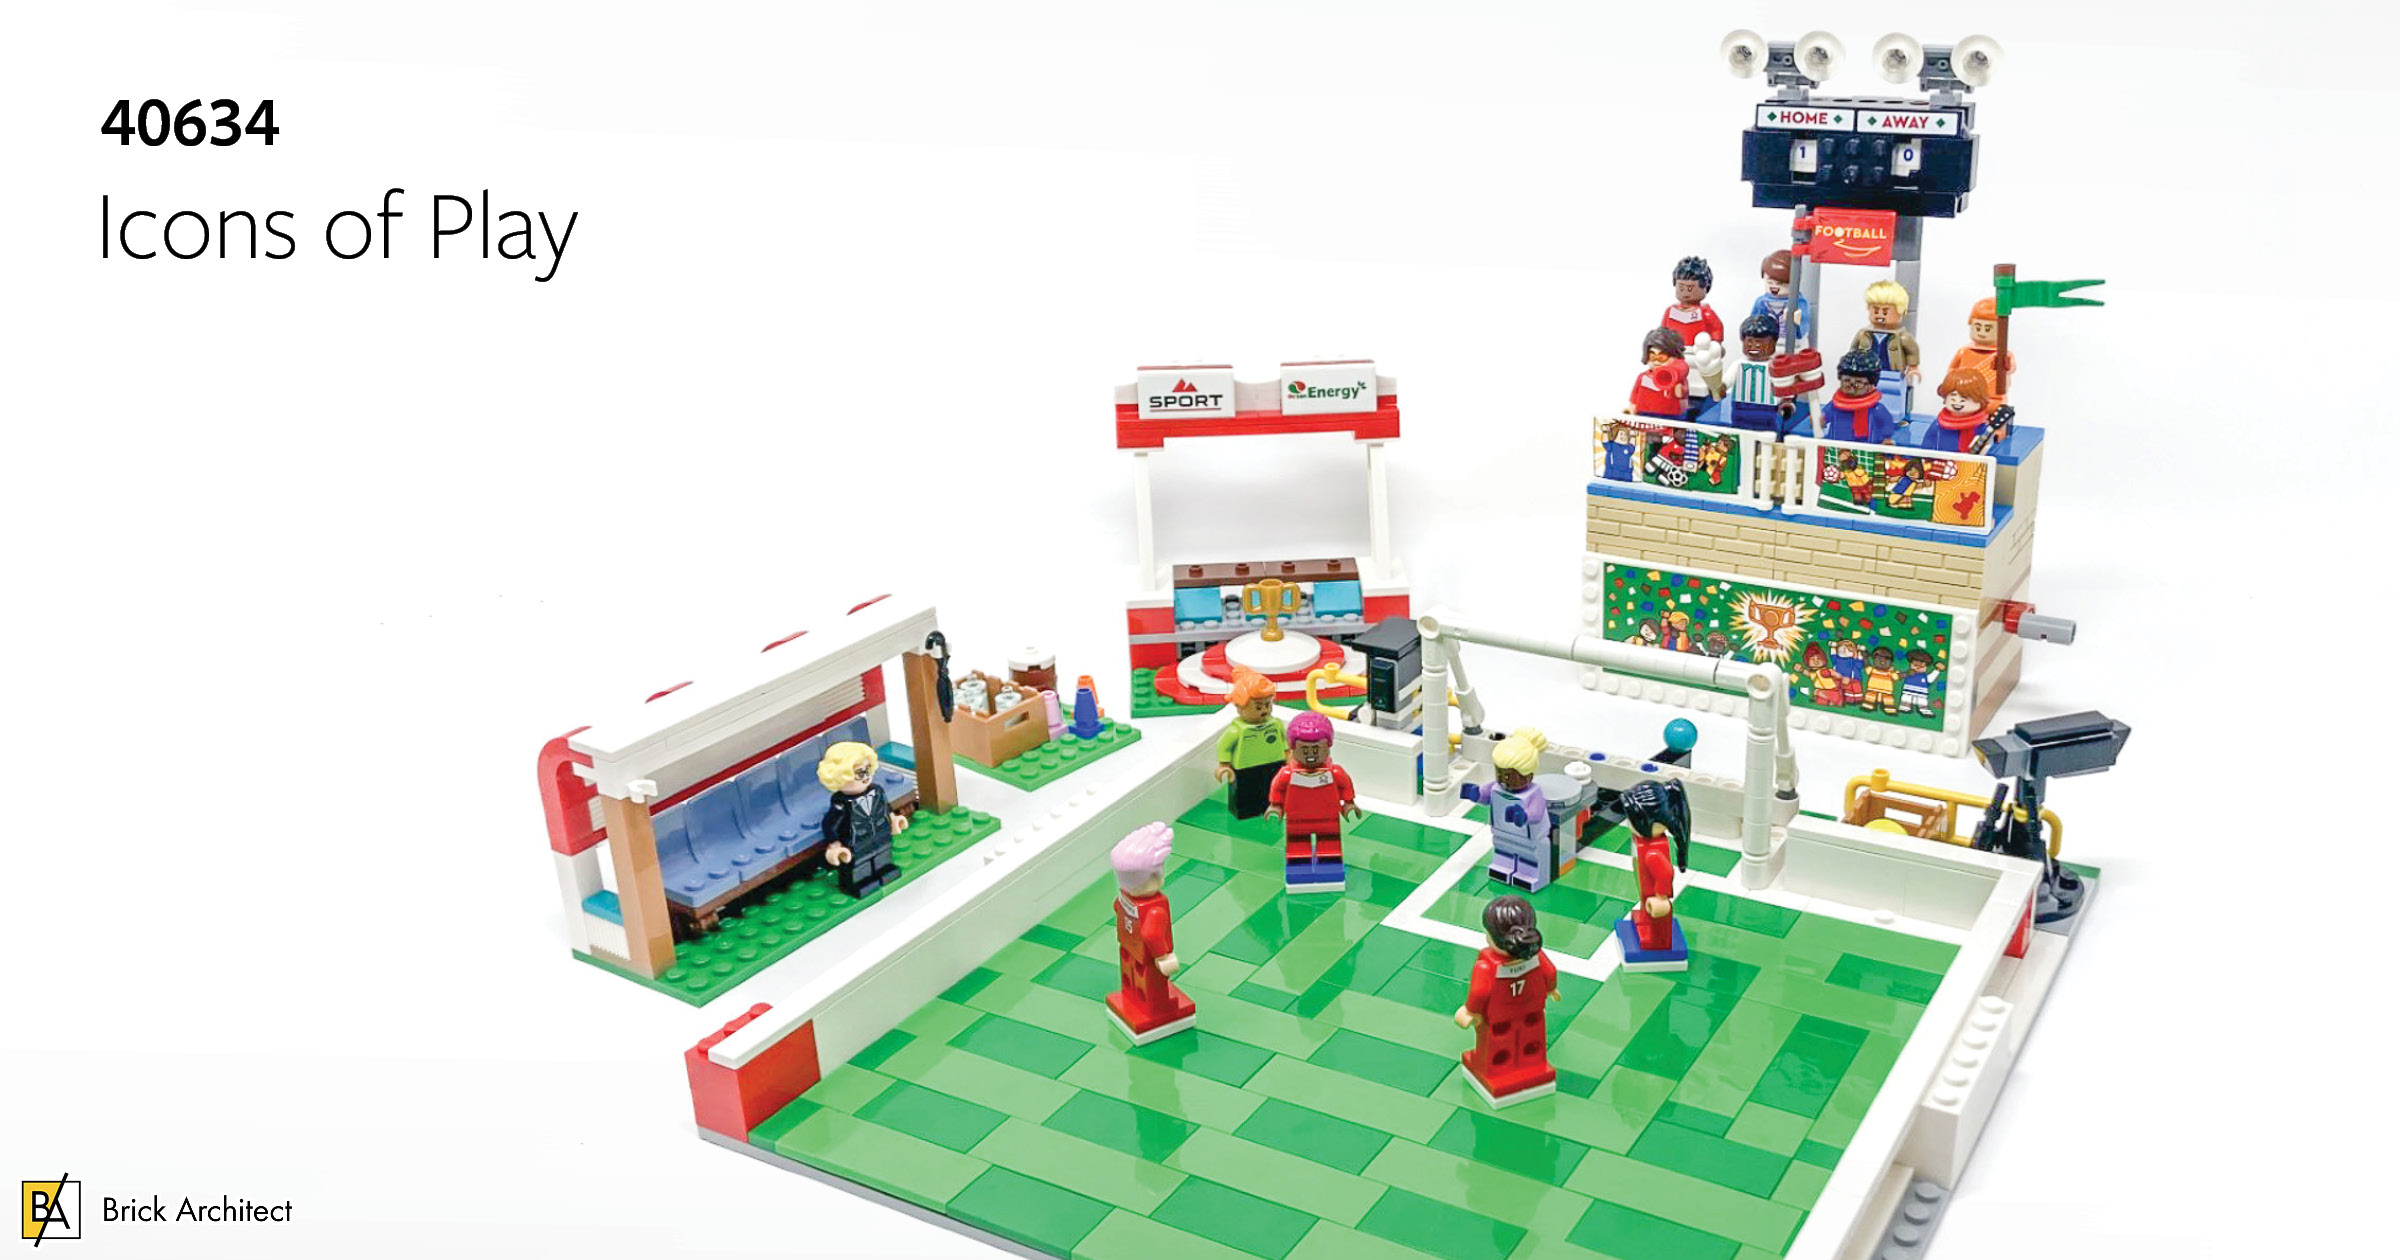 Lego photo, Lego football, Lego soccer